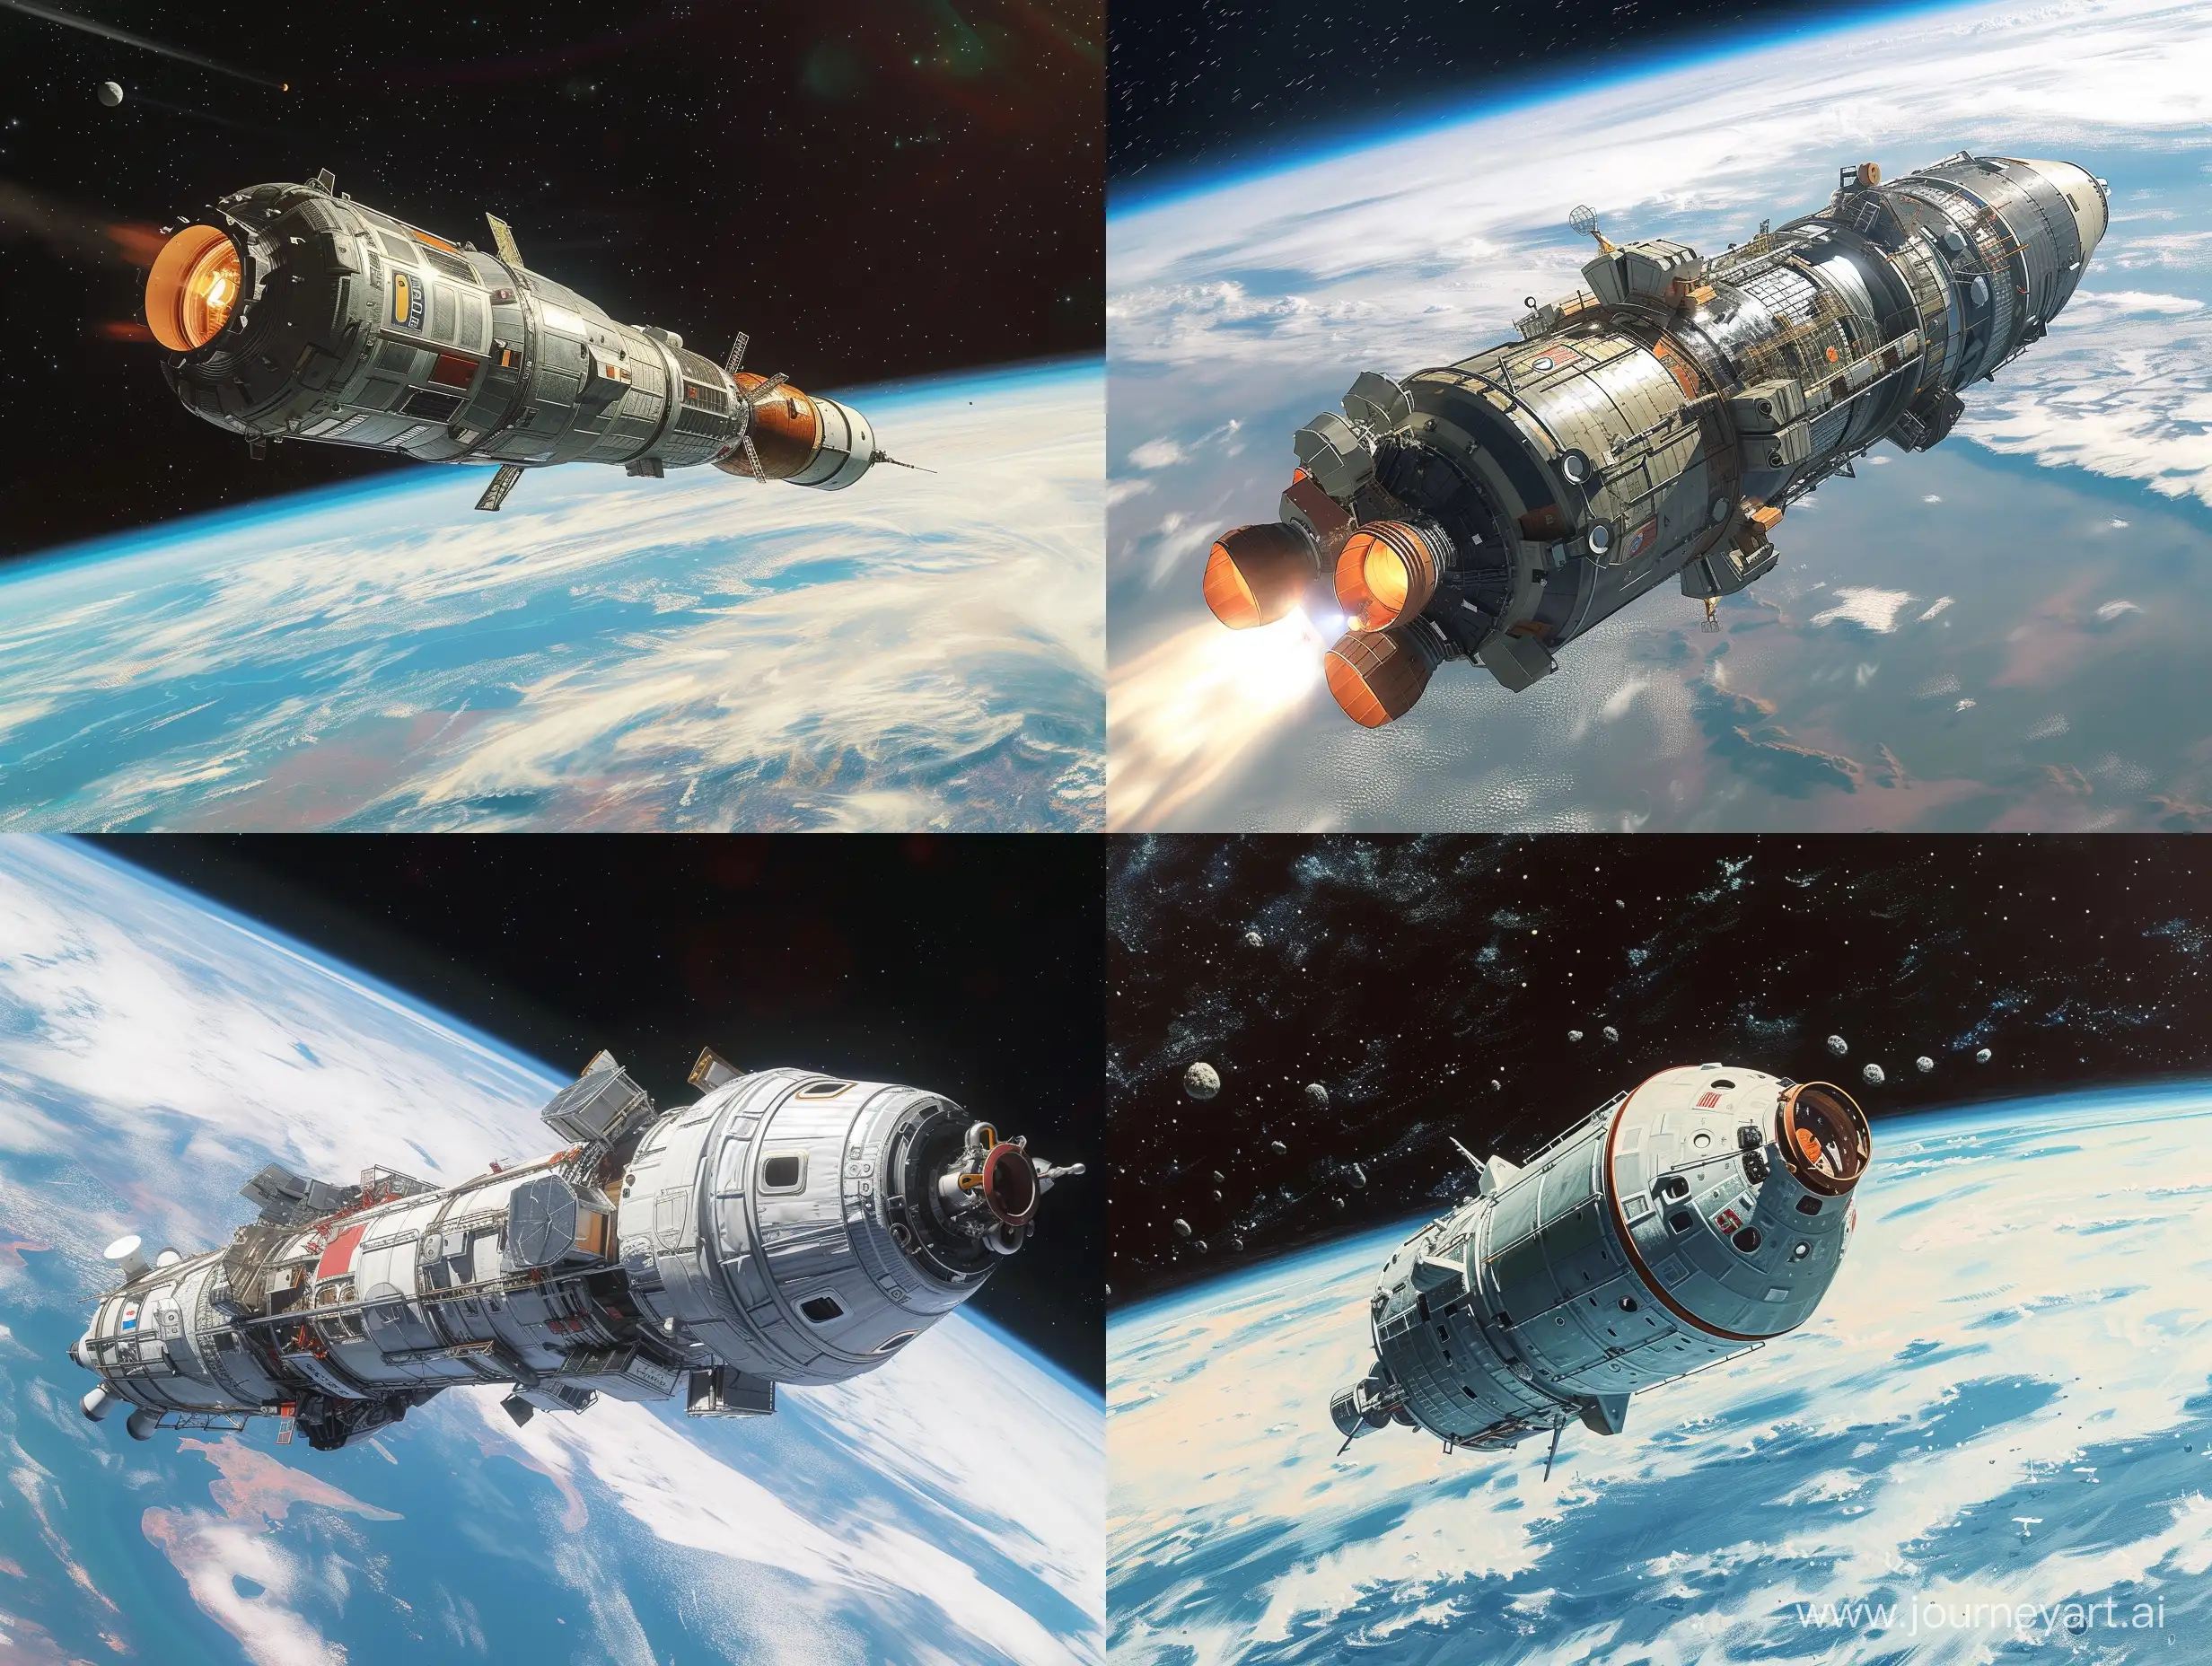 Russian-Spacecraft-Exploring-Vast-Cosmic-Expanse-in-Hyperrealistic-Detail